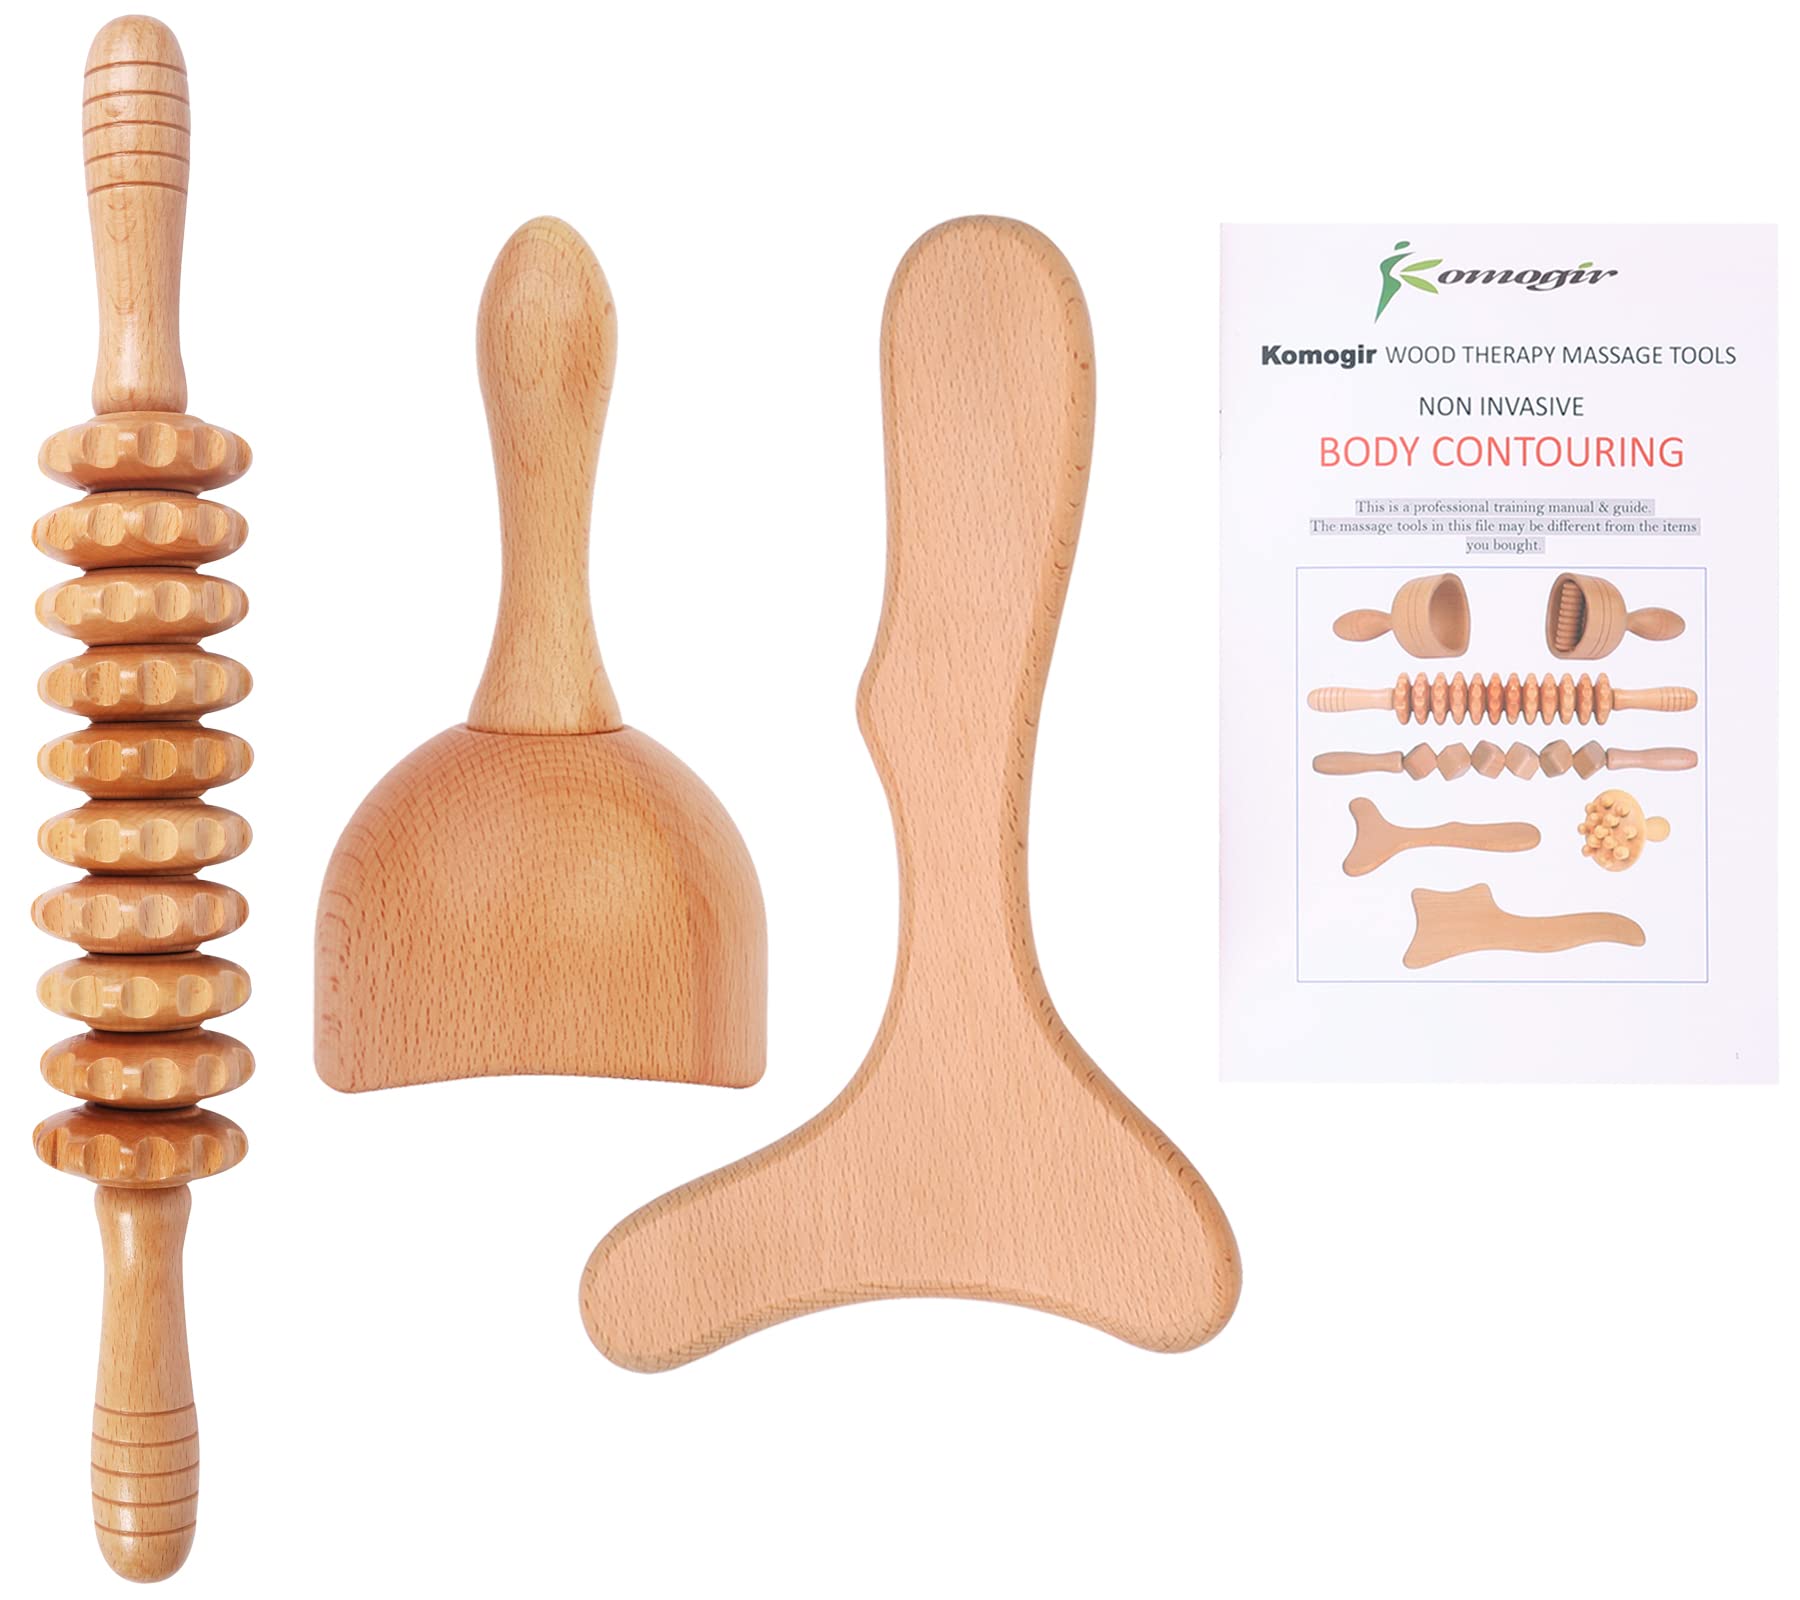 Wooden Massage Tools for Anti-Cellulite Treatment - PALO BONDI